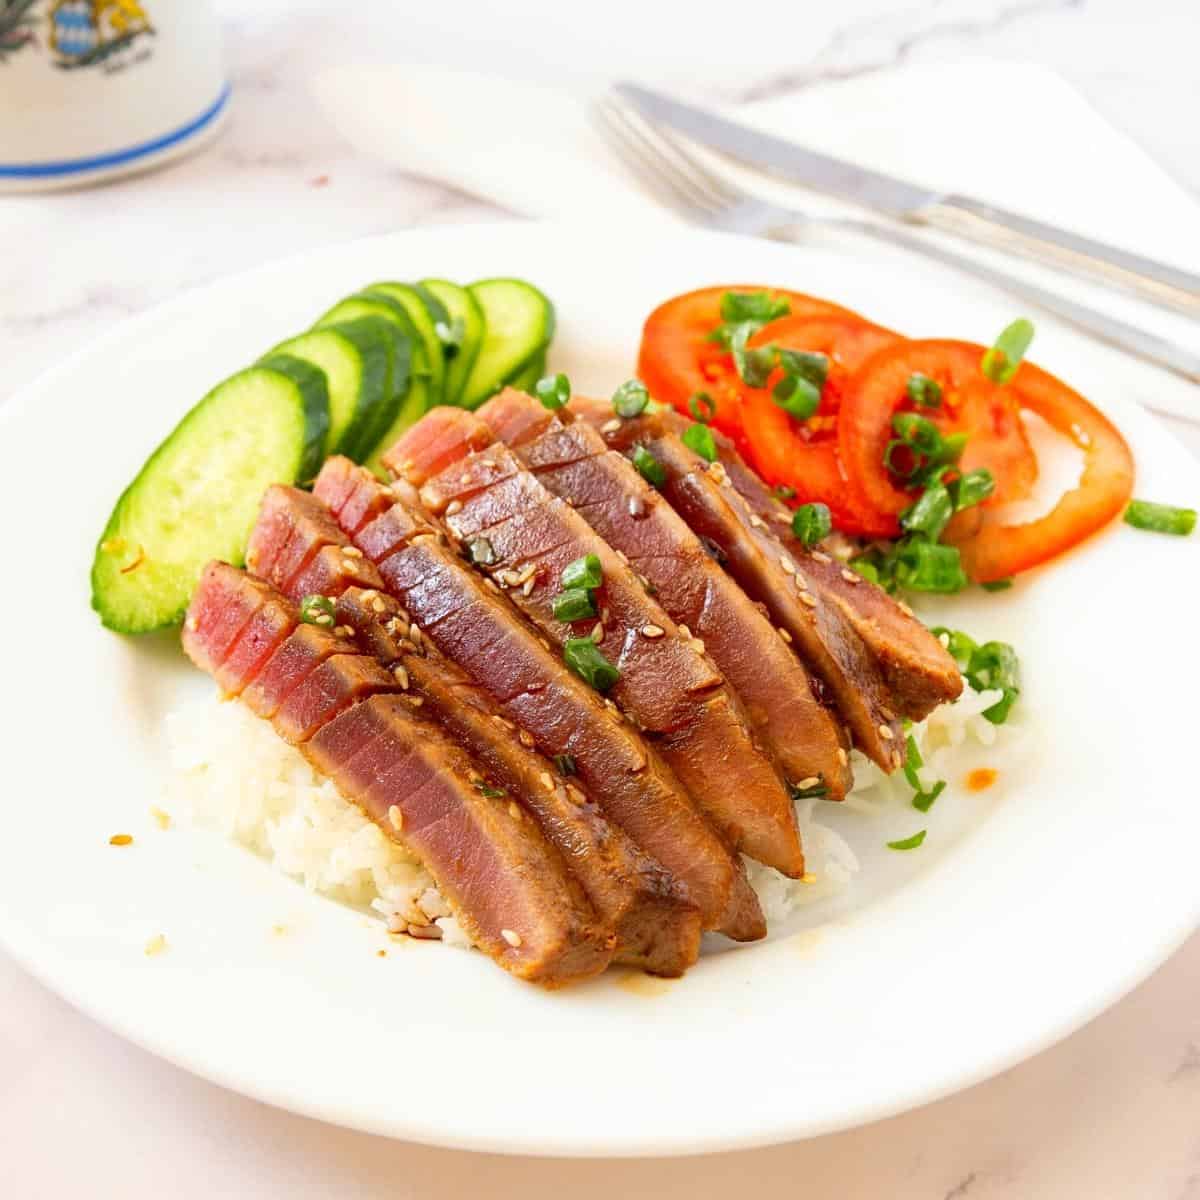 Sliced tuna steak on the plate.